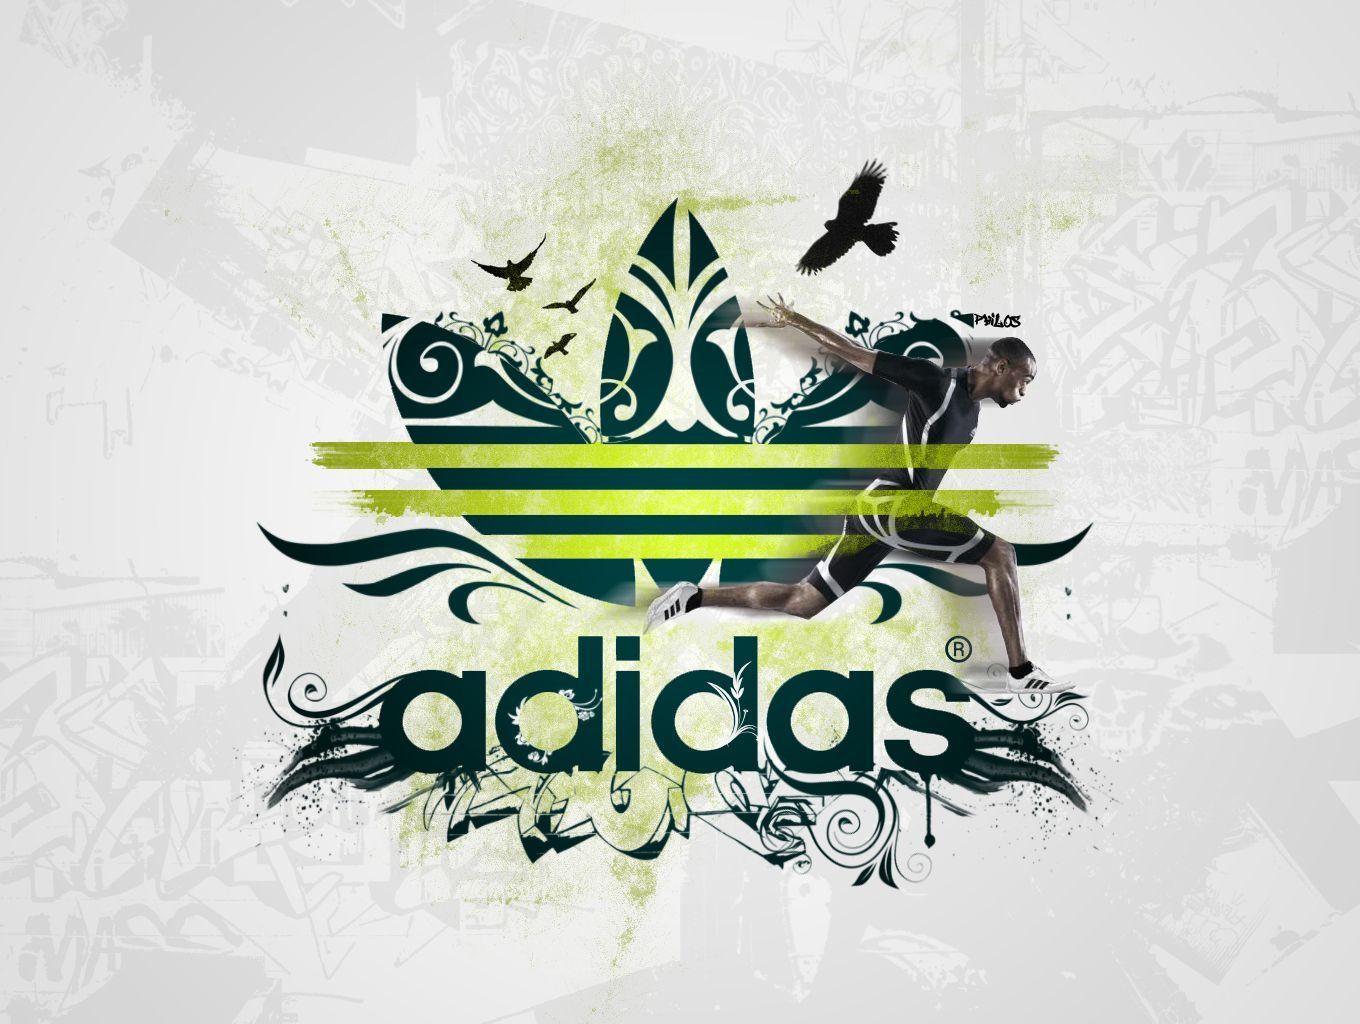 Wallpaper Adidas Logo Wallpapers